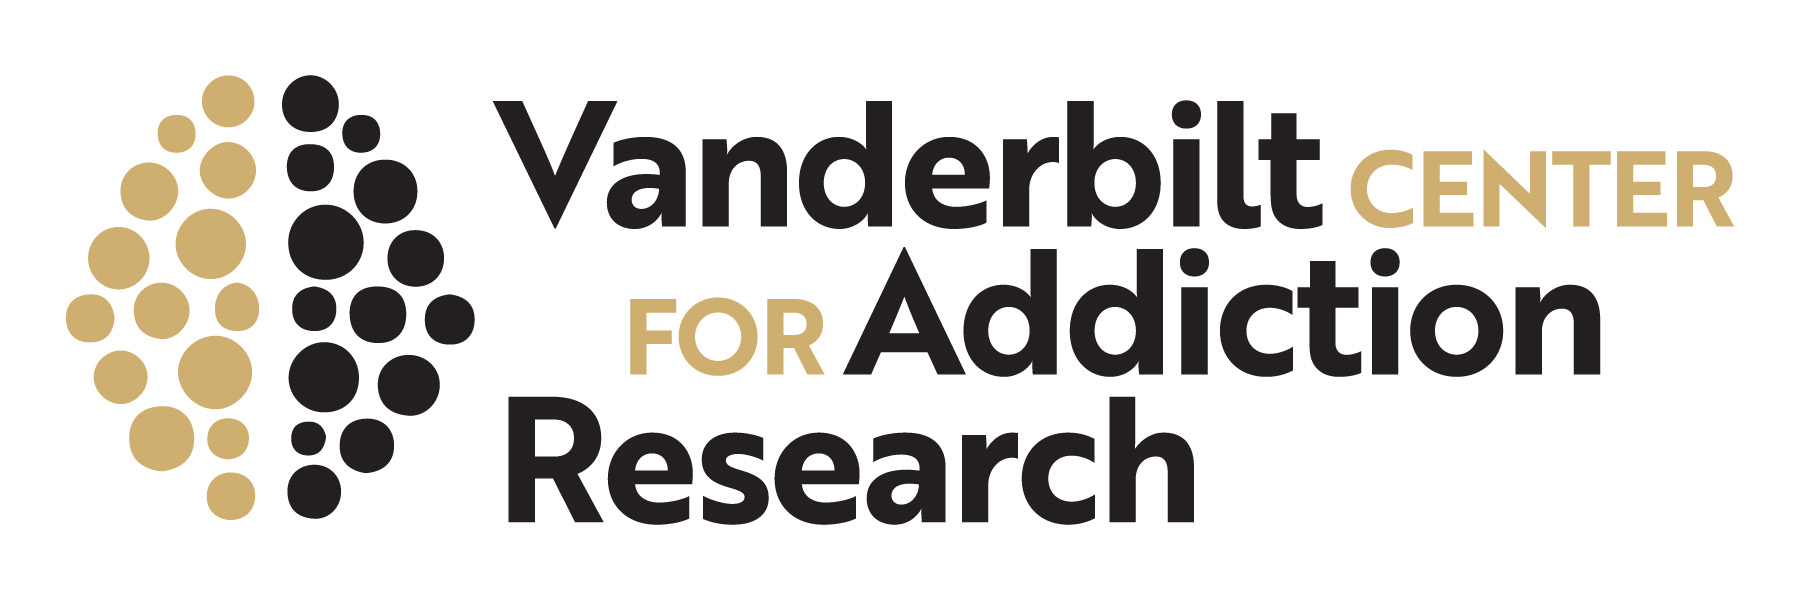 Vanderbilt Center for Addiction Research joins Discovery Vanderbilt; Calipari appointed director  